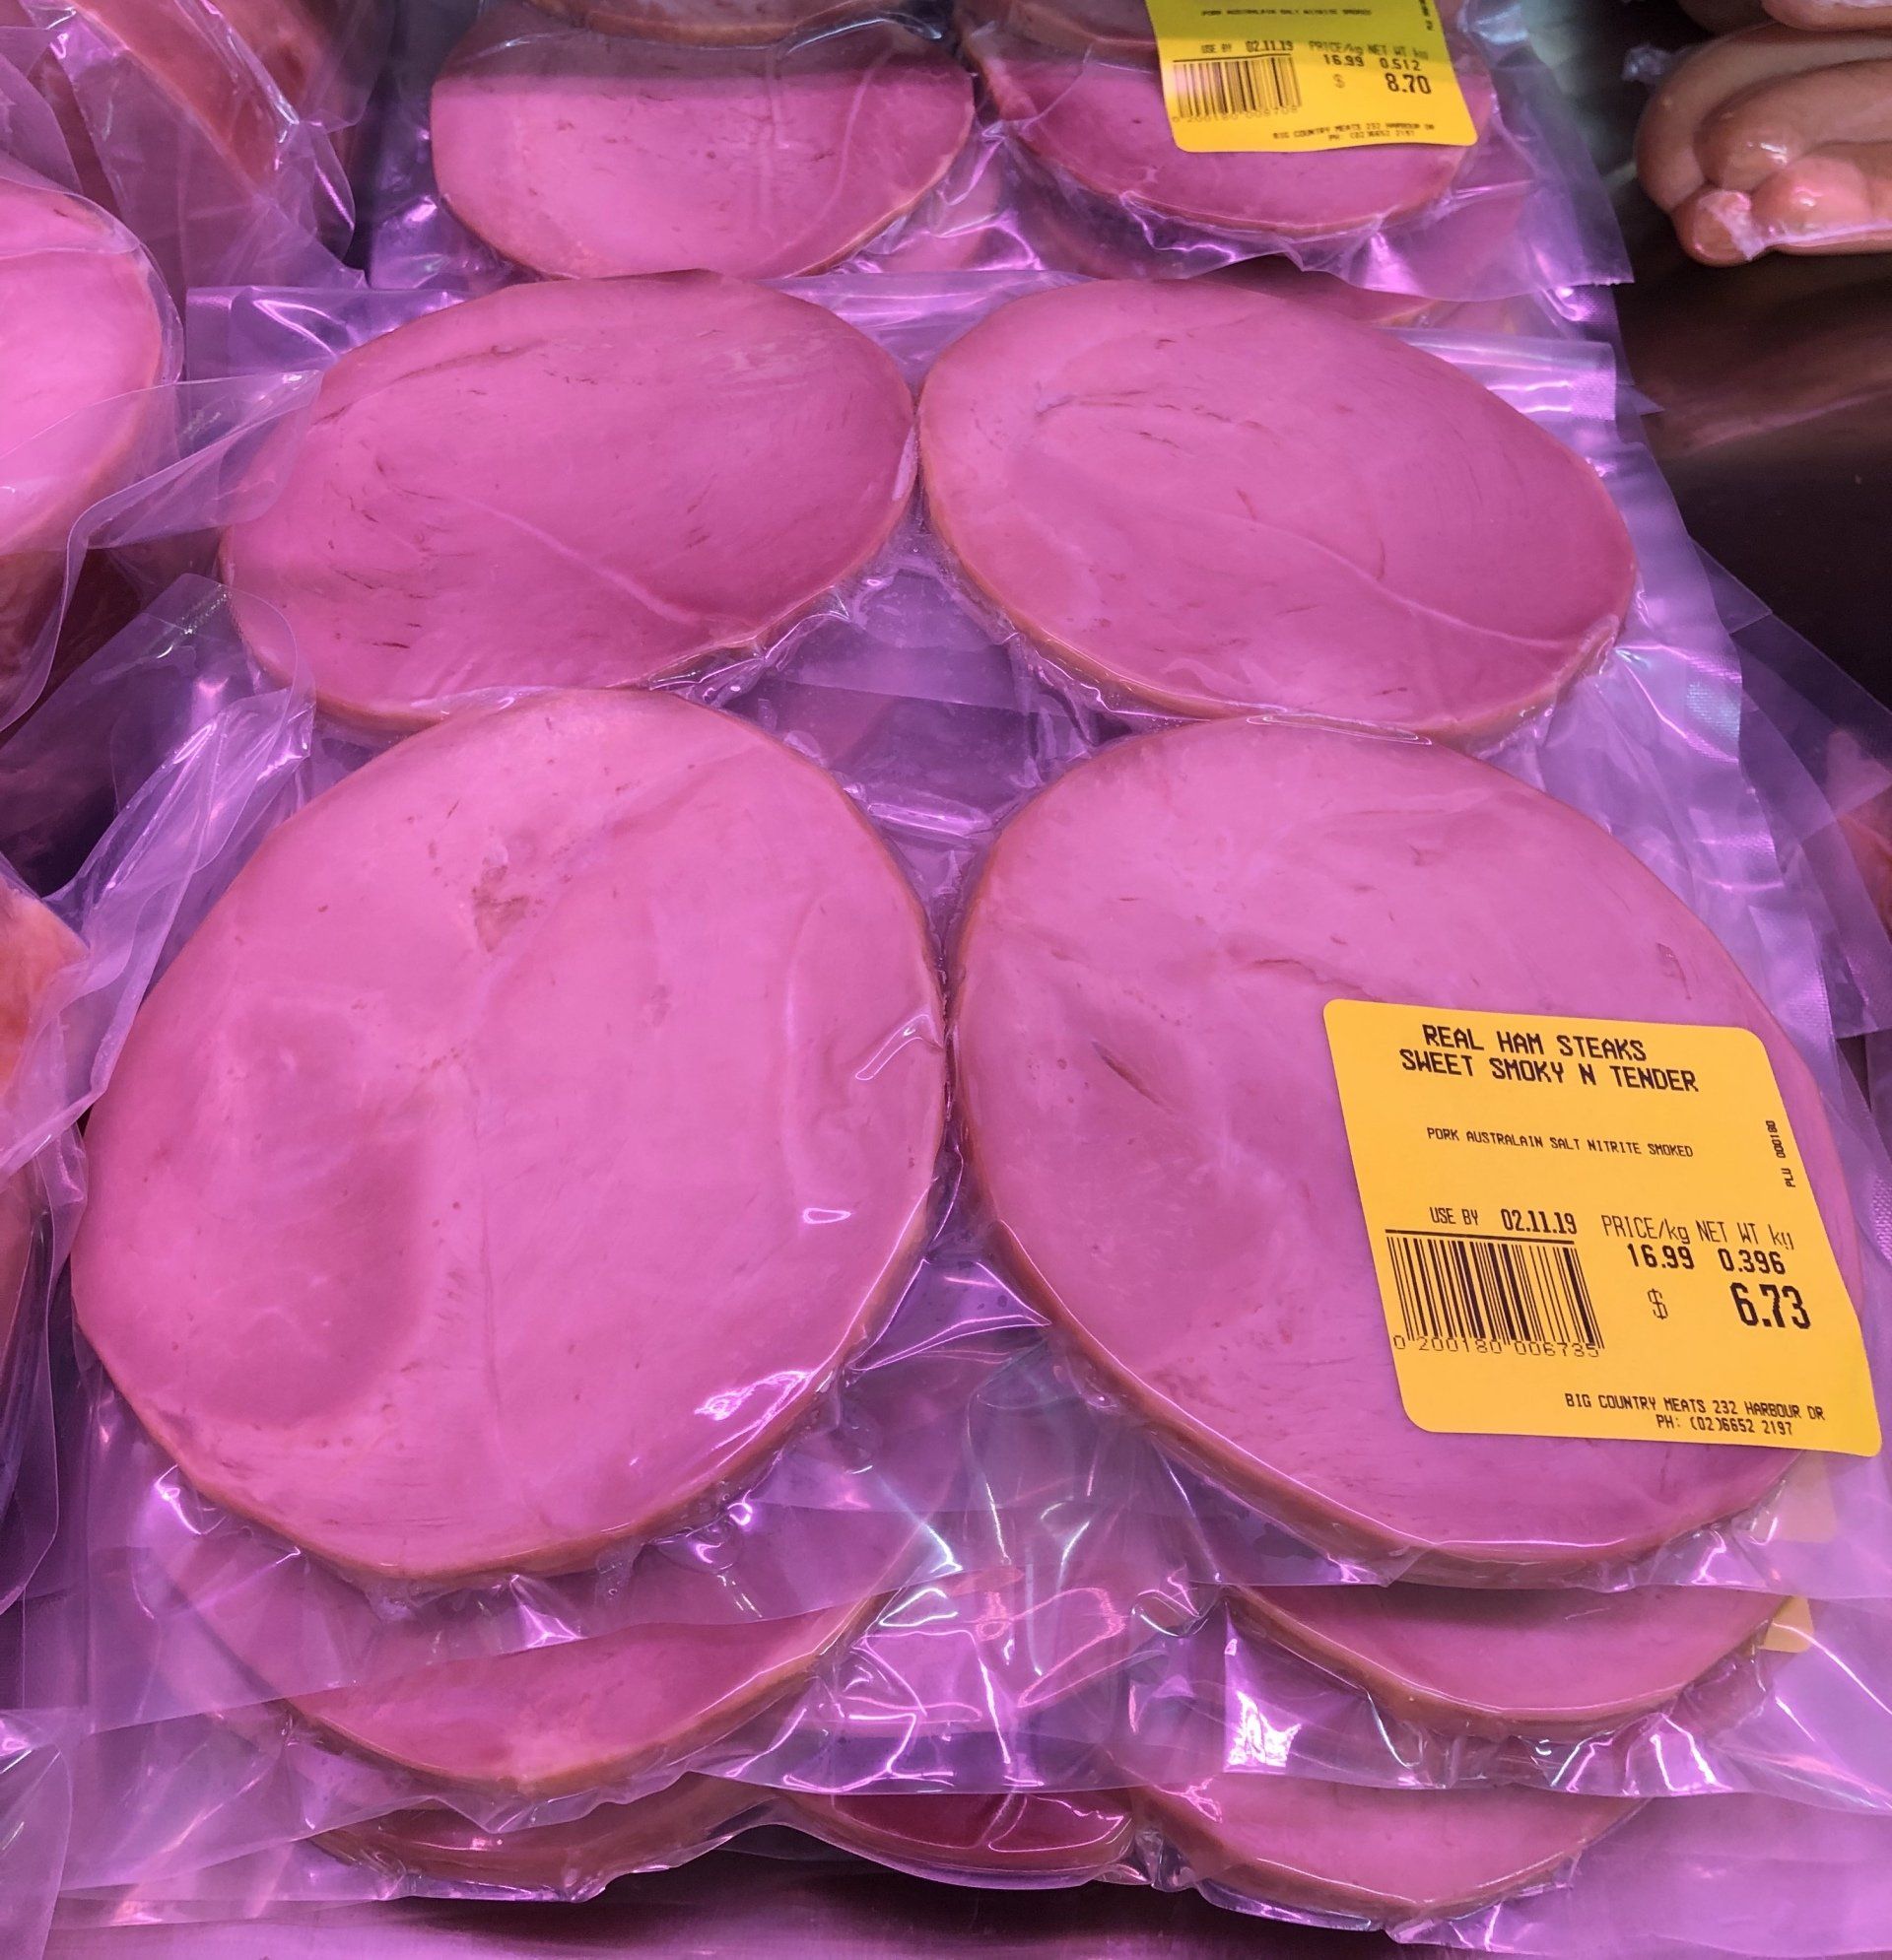 Ham steaks